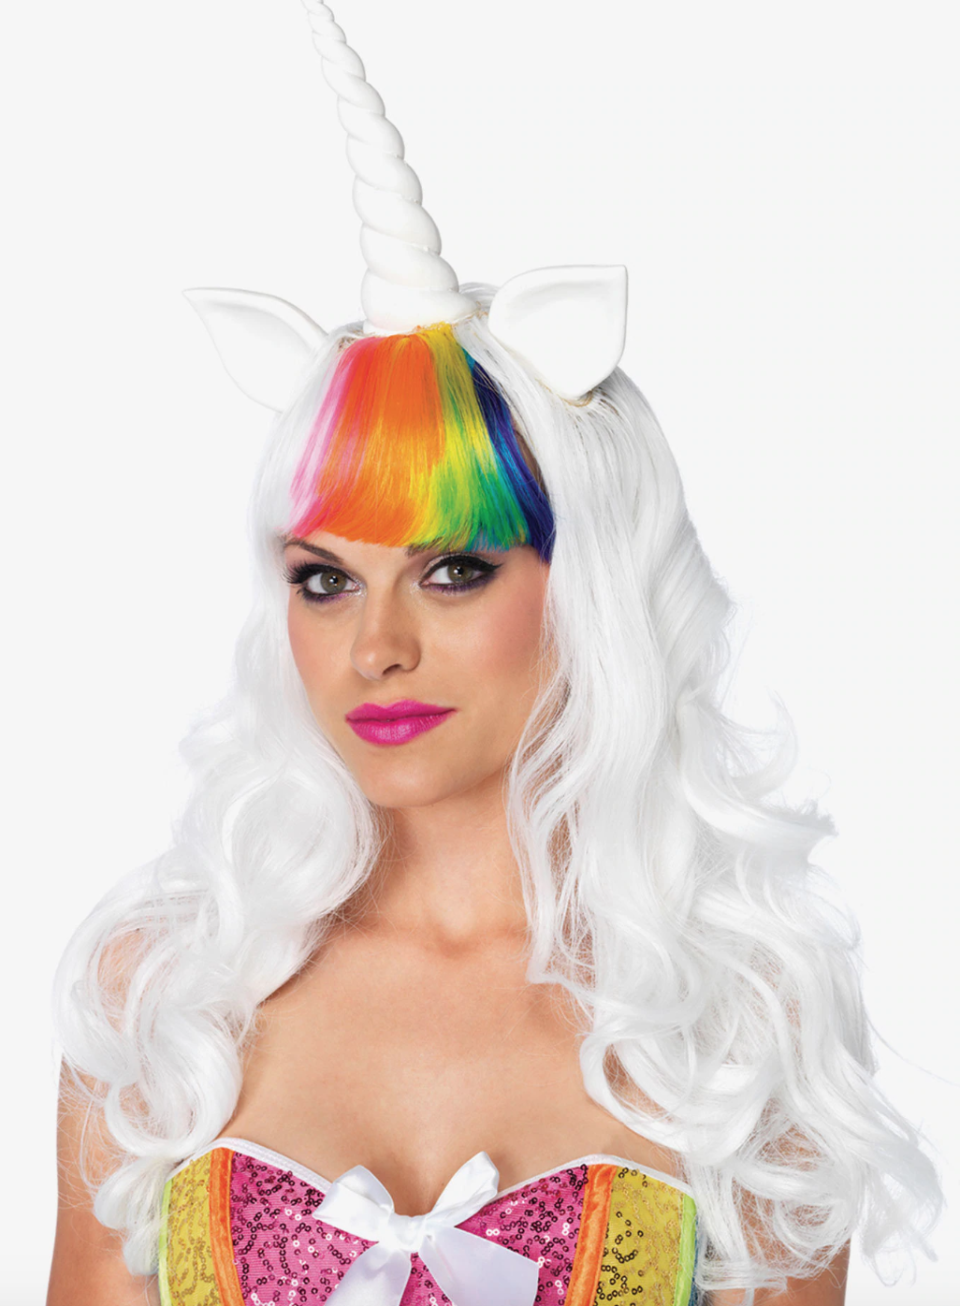 Unicorn Wig and Rainbow Tail. Image via Hot Topic.